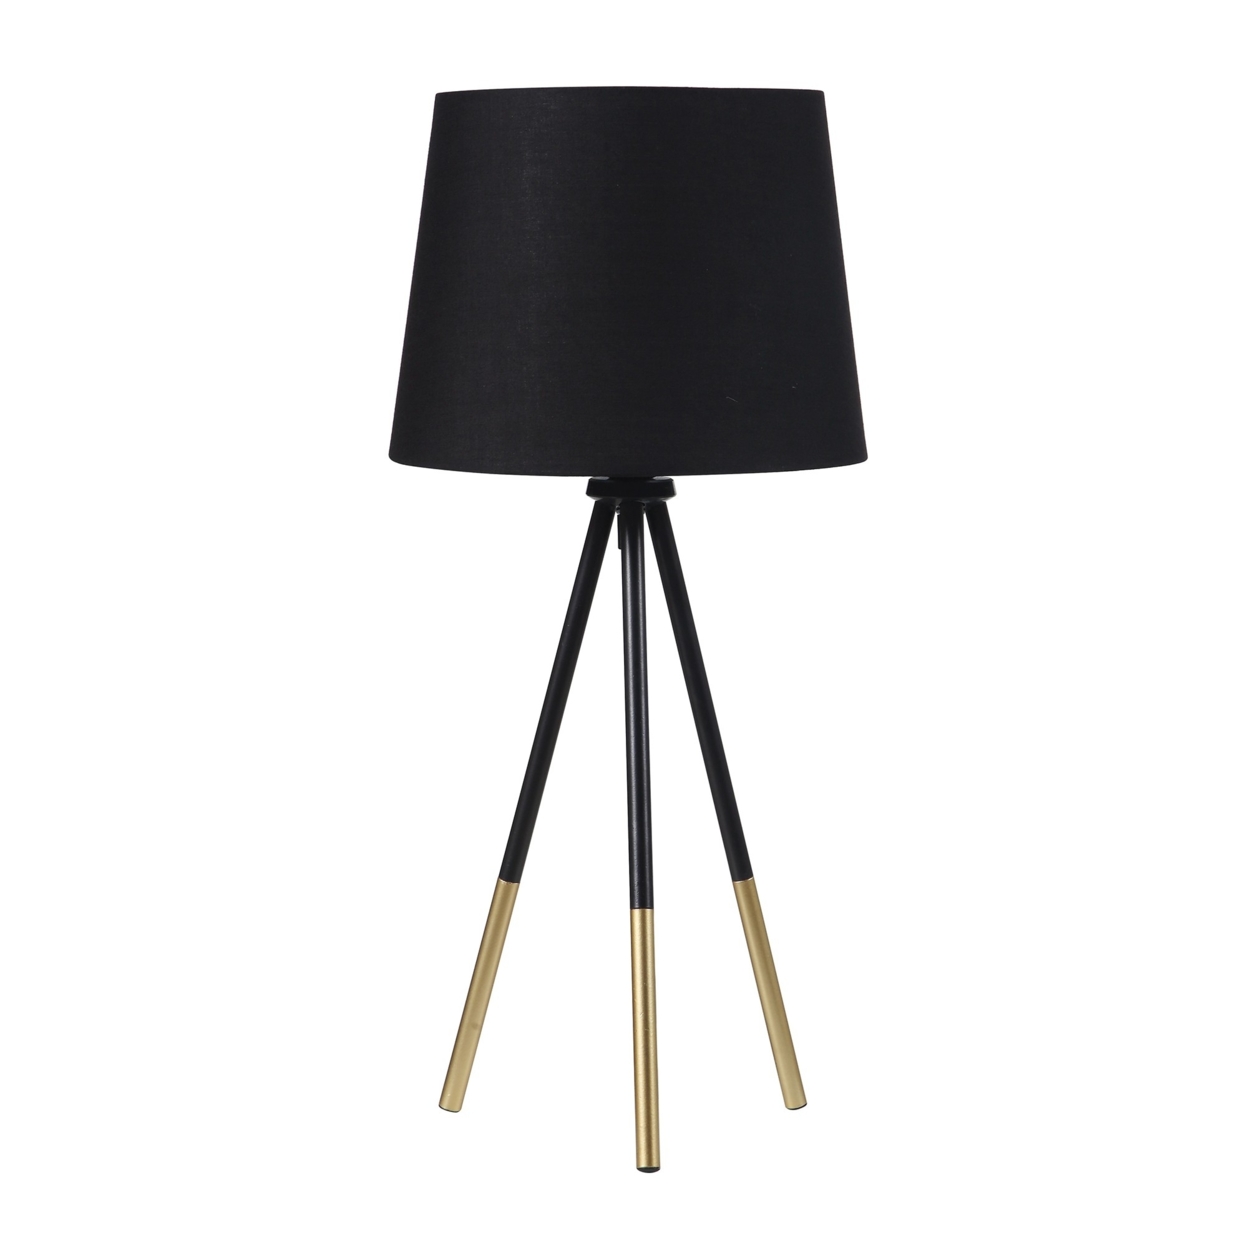 Table Lamp With Tripod Metal Base, Black And Gold- Saltoro Sherpi